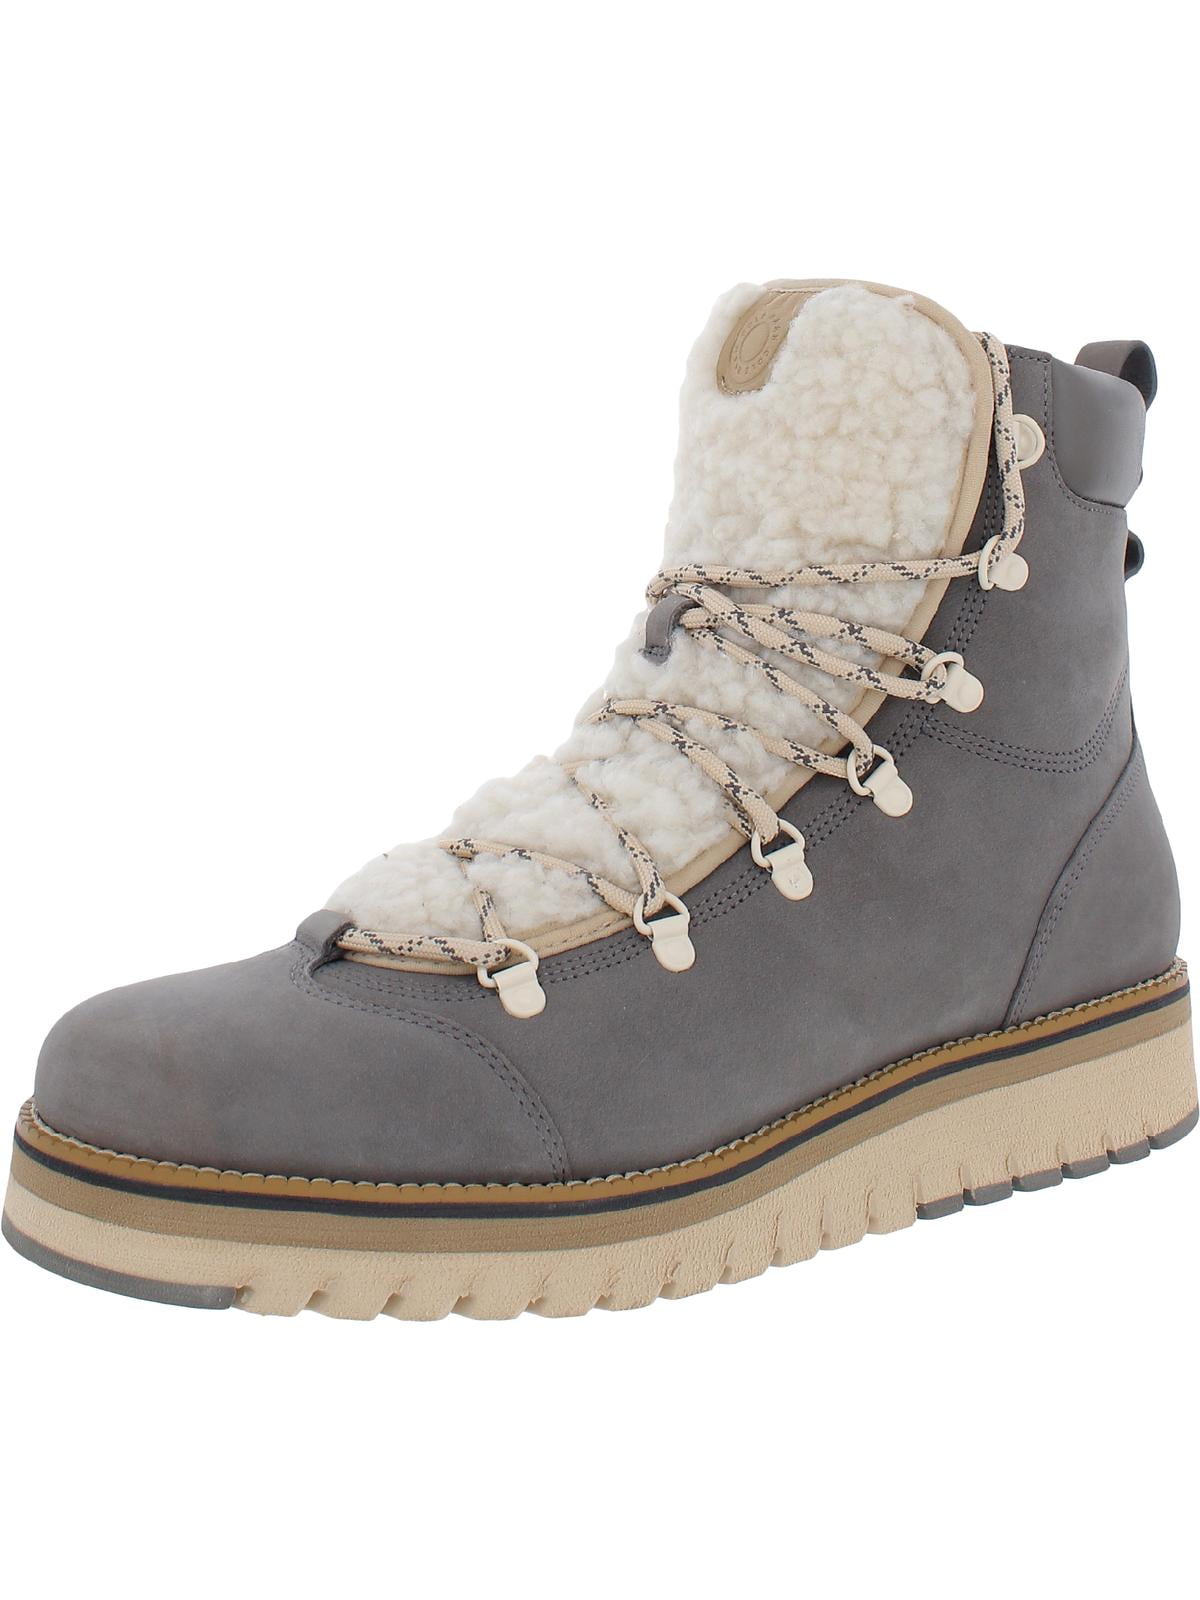 ZeroGrand Cole Haan Womens Leather Faux Fur Hiking Boots - Walmart.com